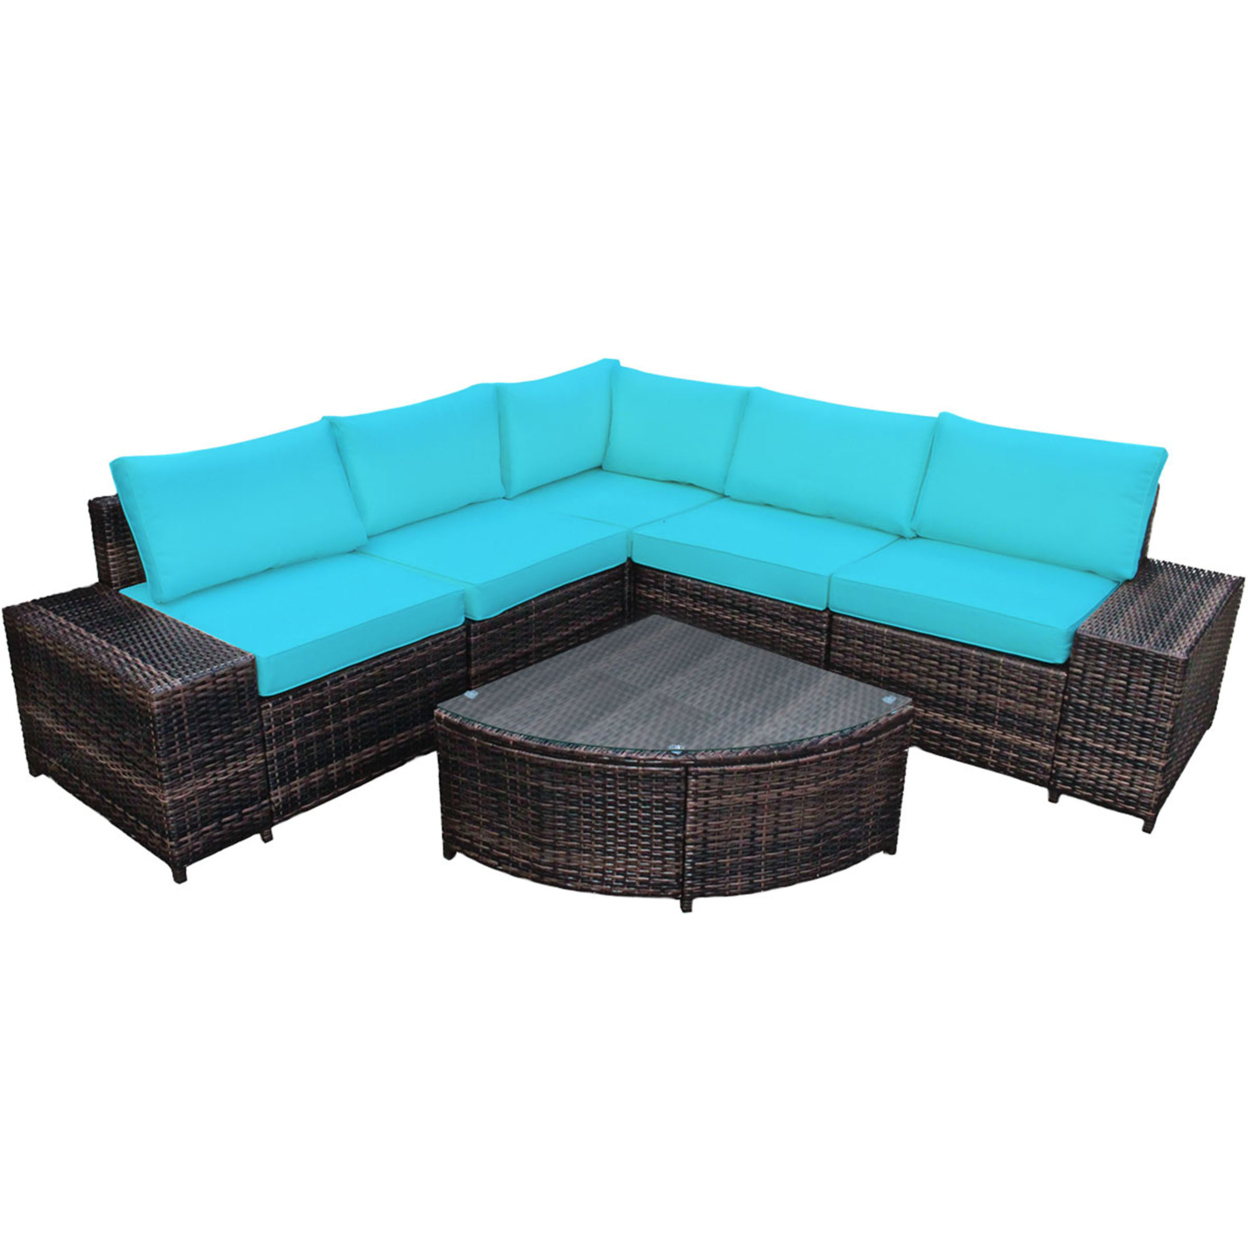 6PCS Wicker Furniture Sectional Sofa Set W/ Cushions Turquoise